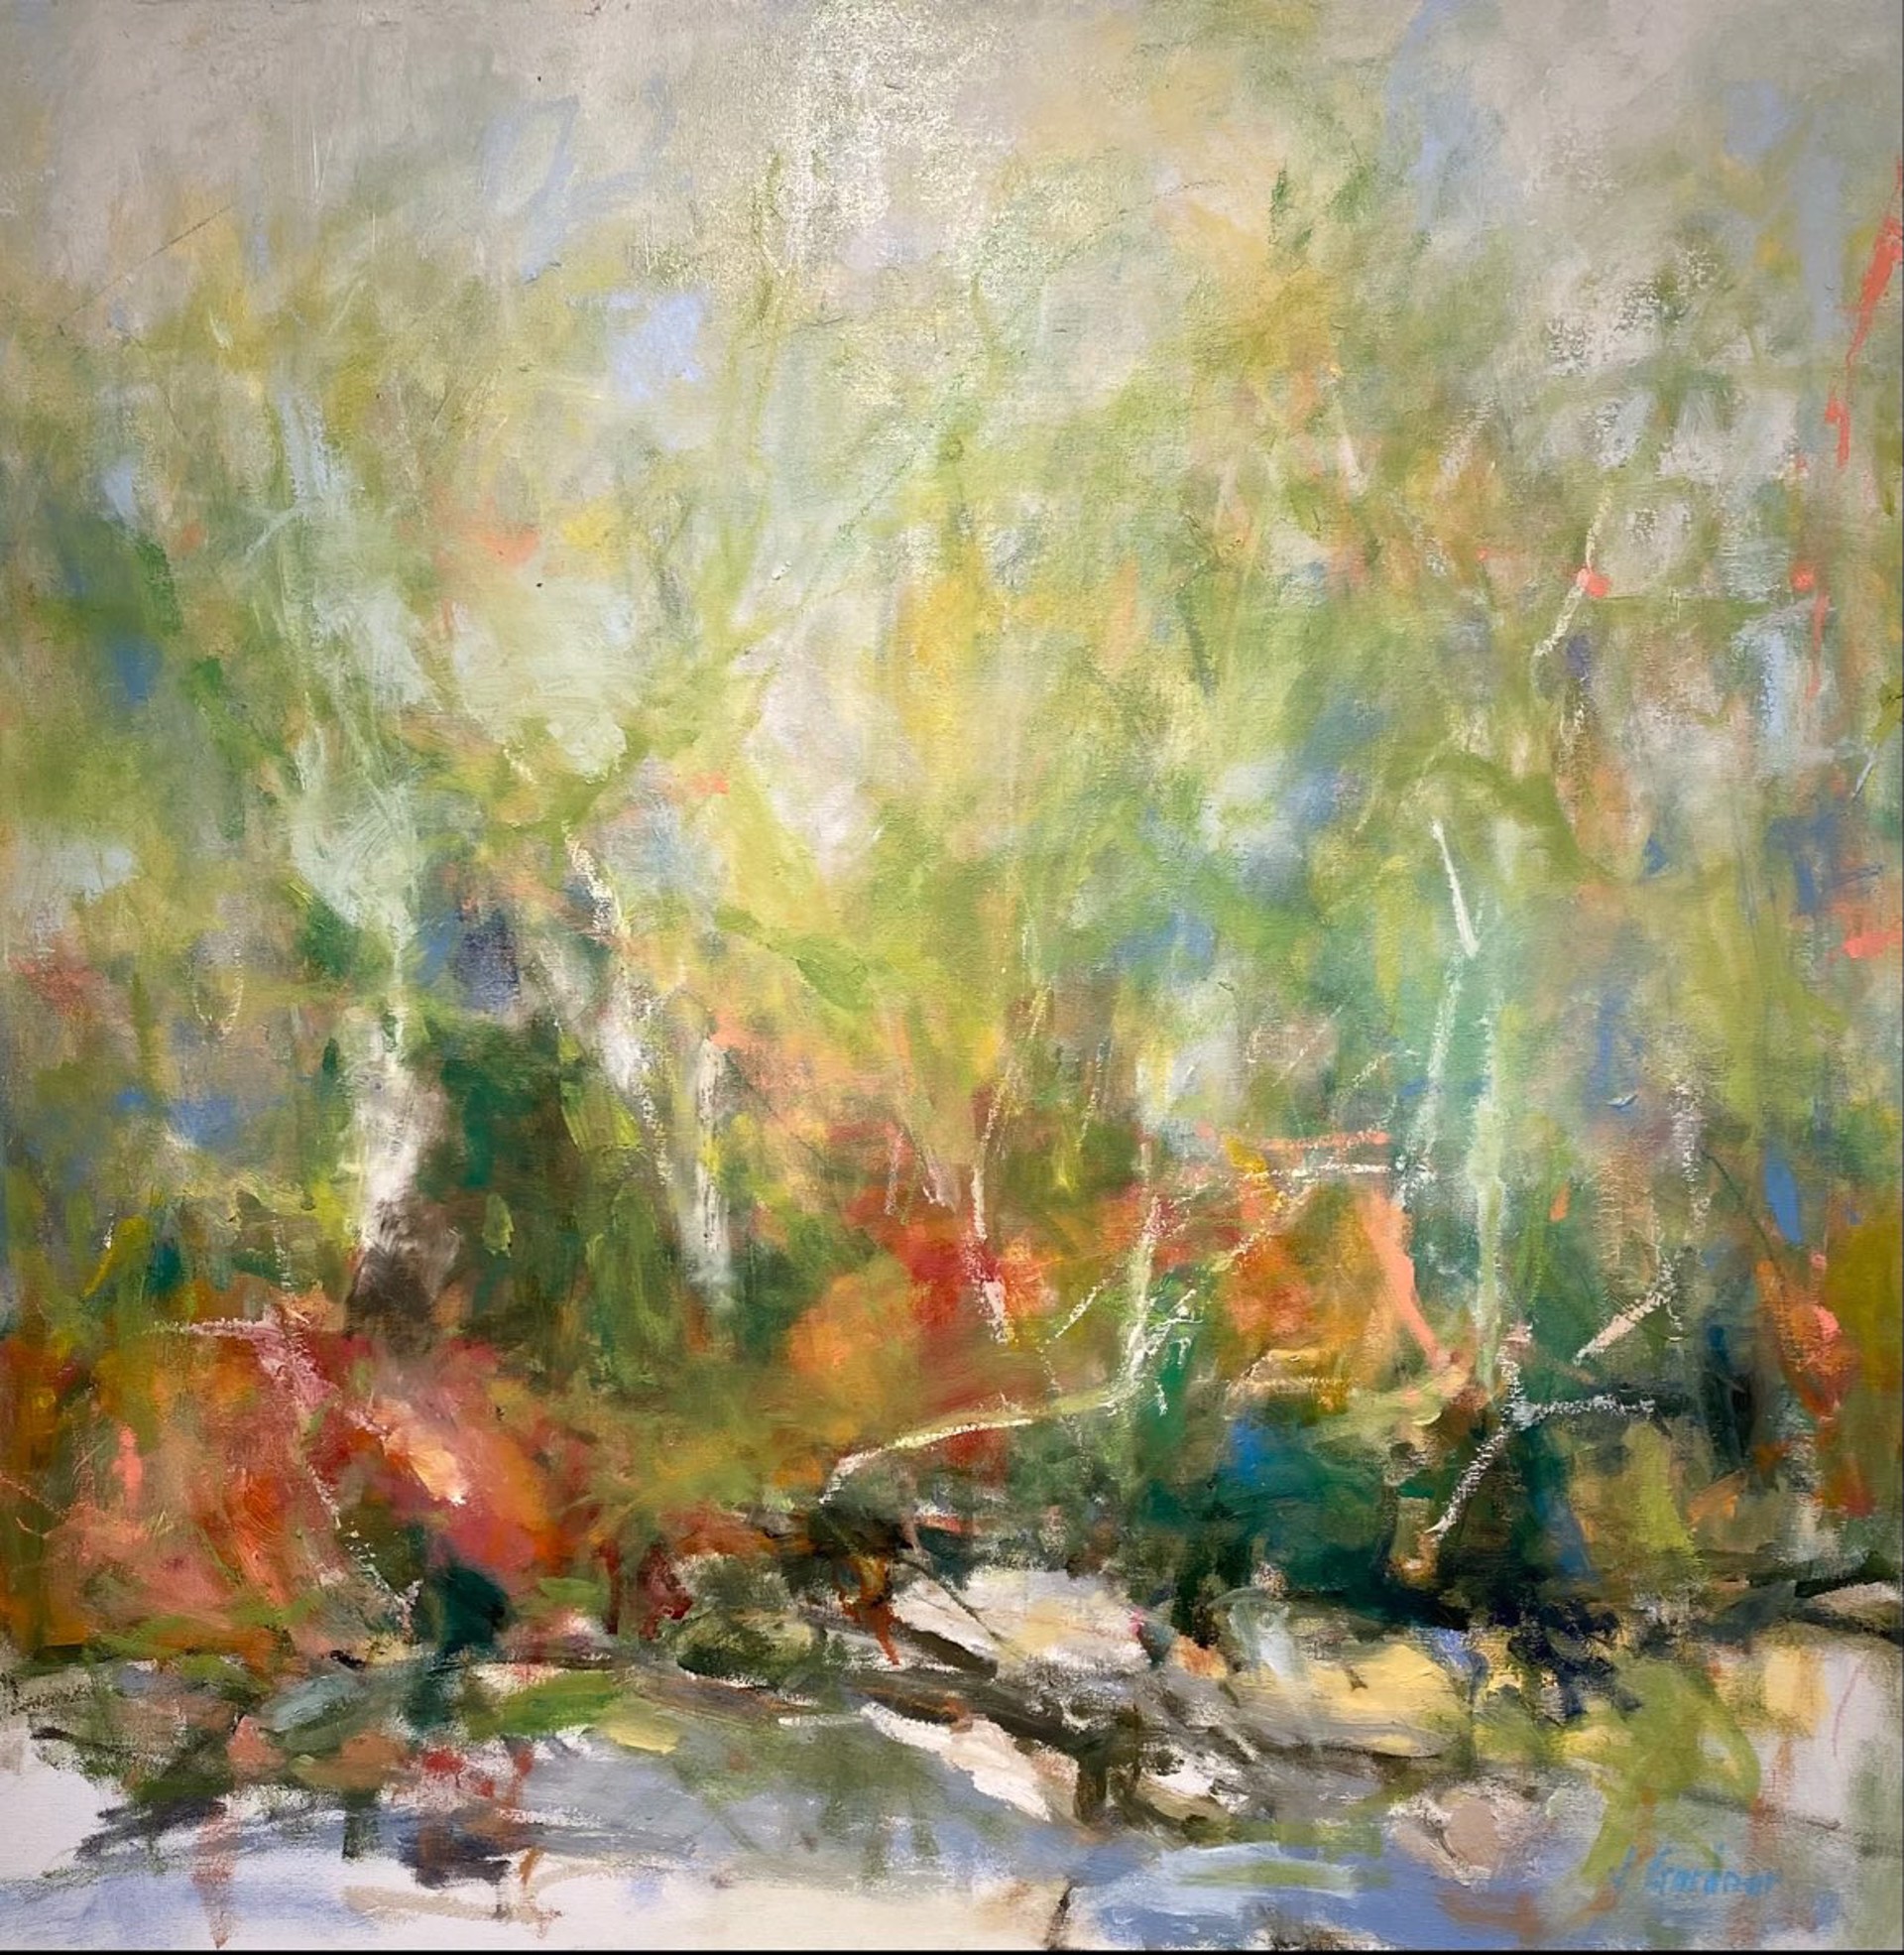 Across the River by Joy Gardner